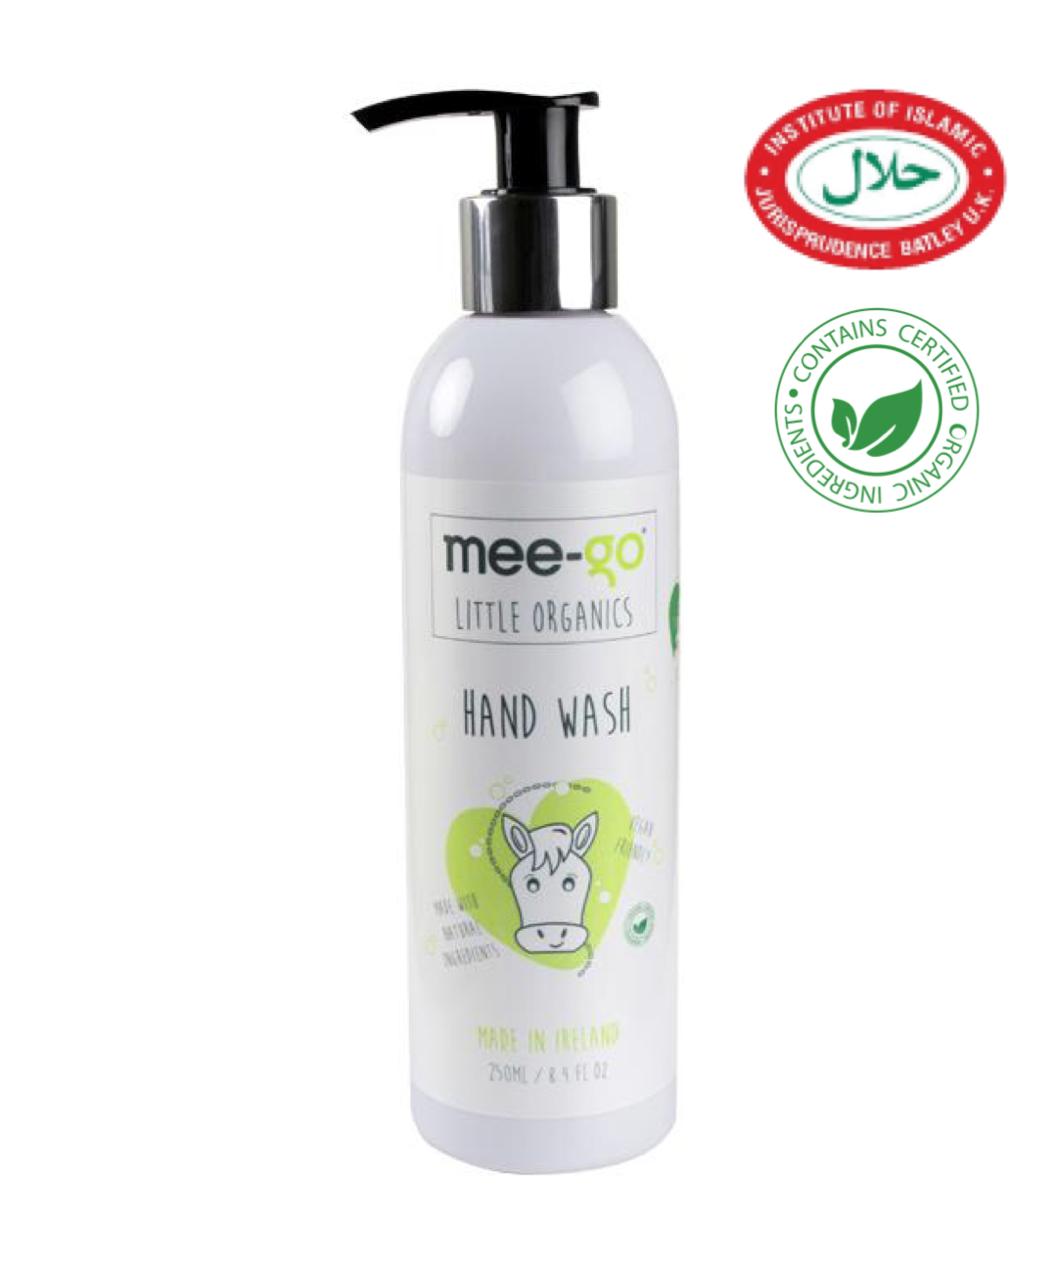 Mee-go Little Organics Halal Hygiene Set